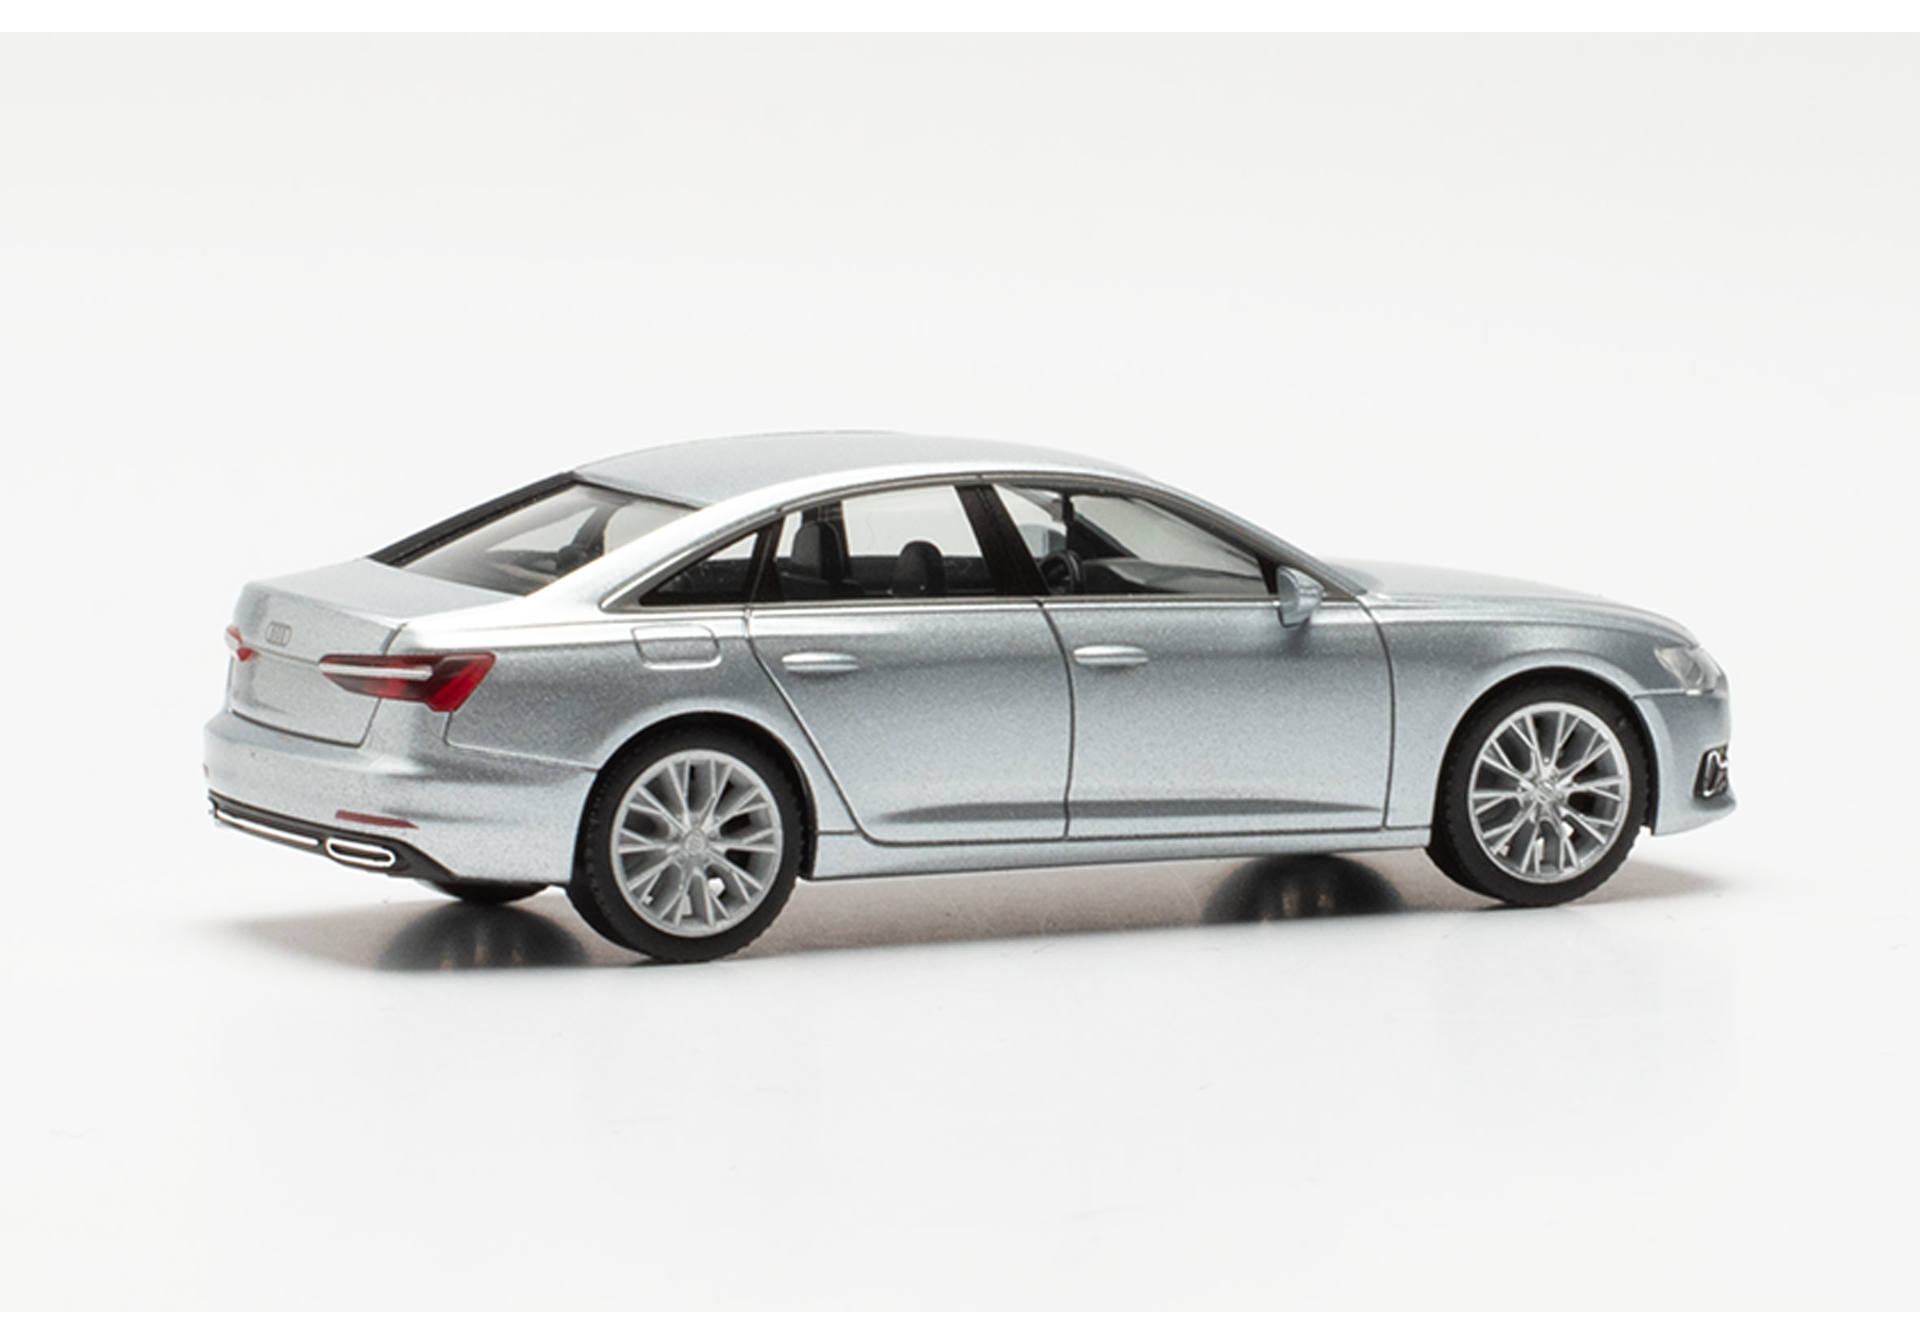 Audi A6 Limousine, floret silver metallic